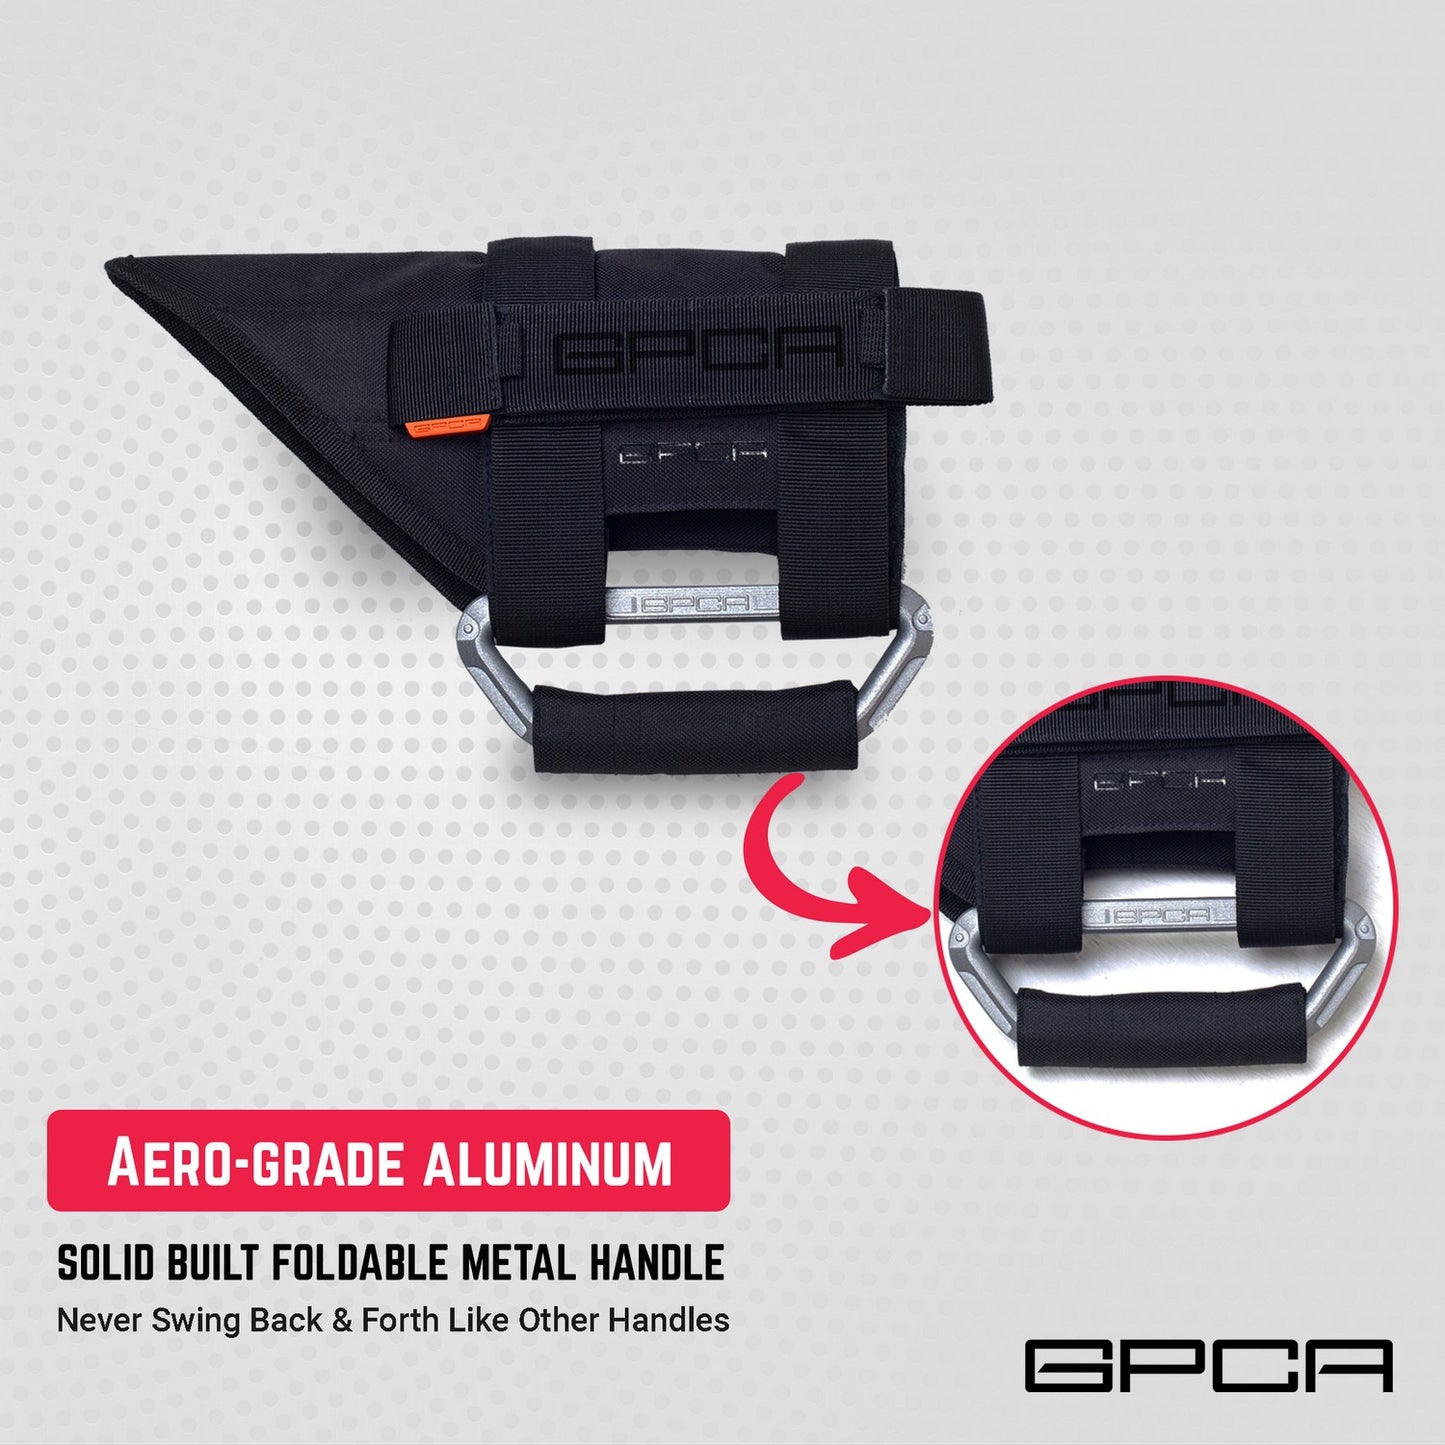 GPCA GP Grip PRO, aero glade aluminum handle